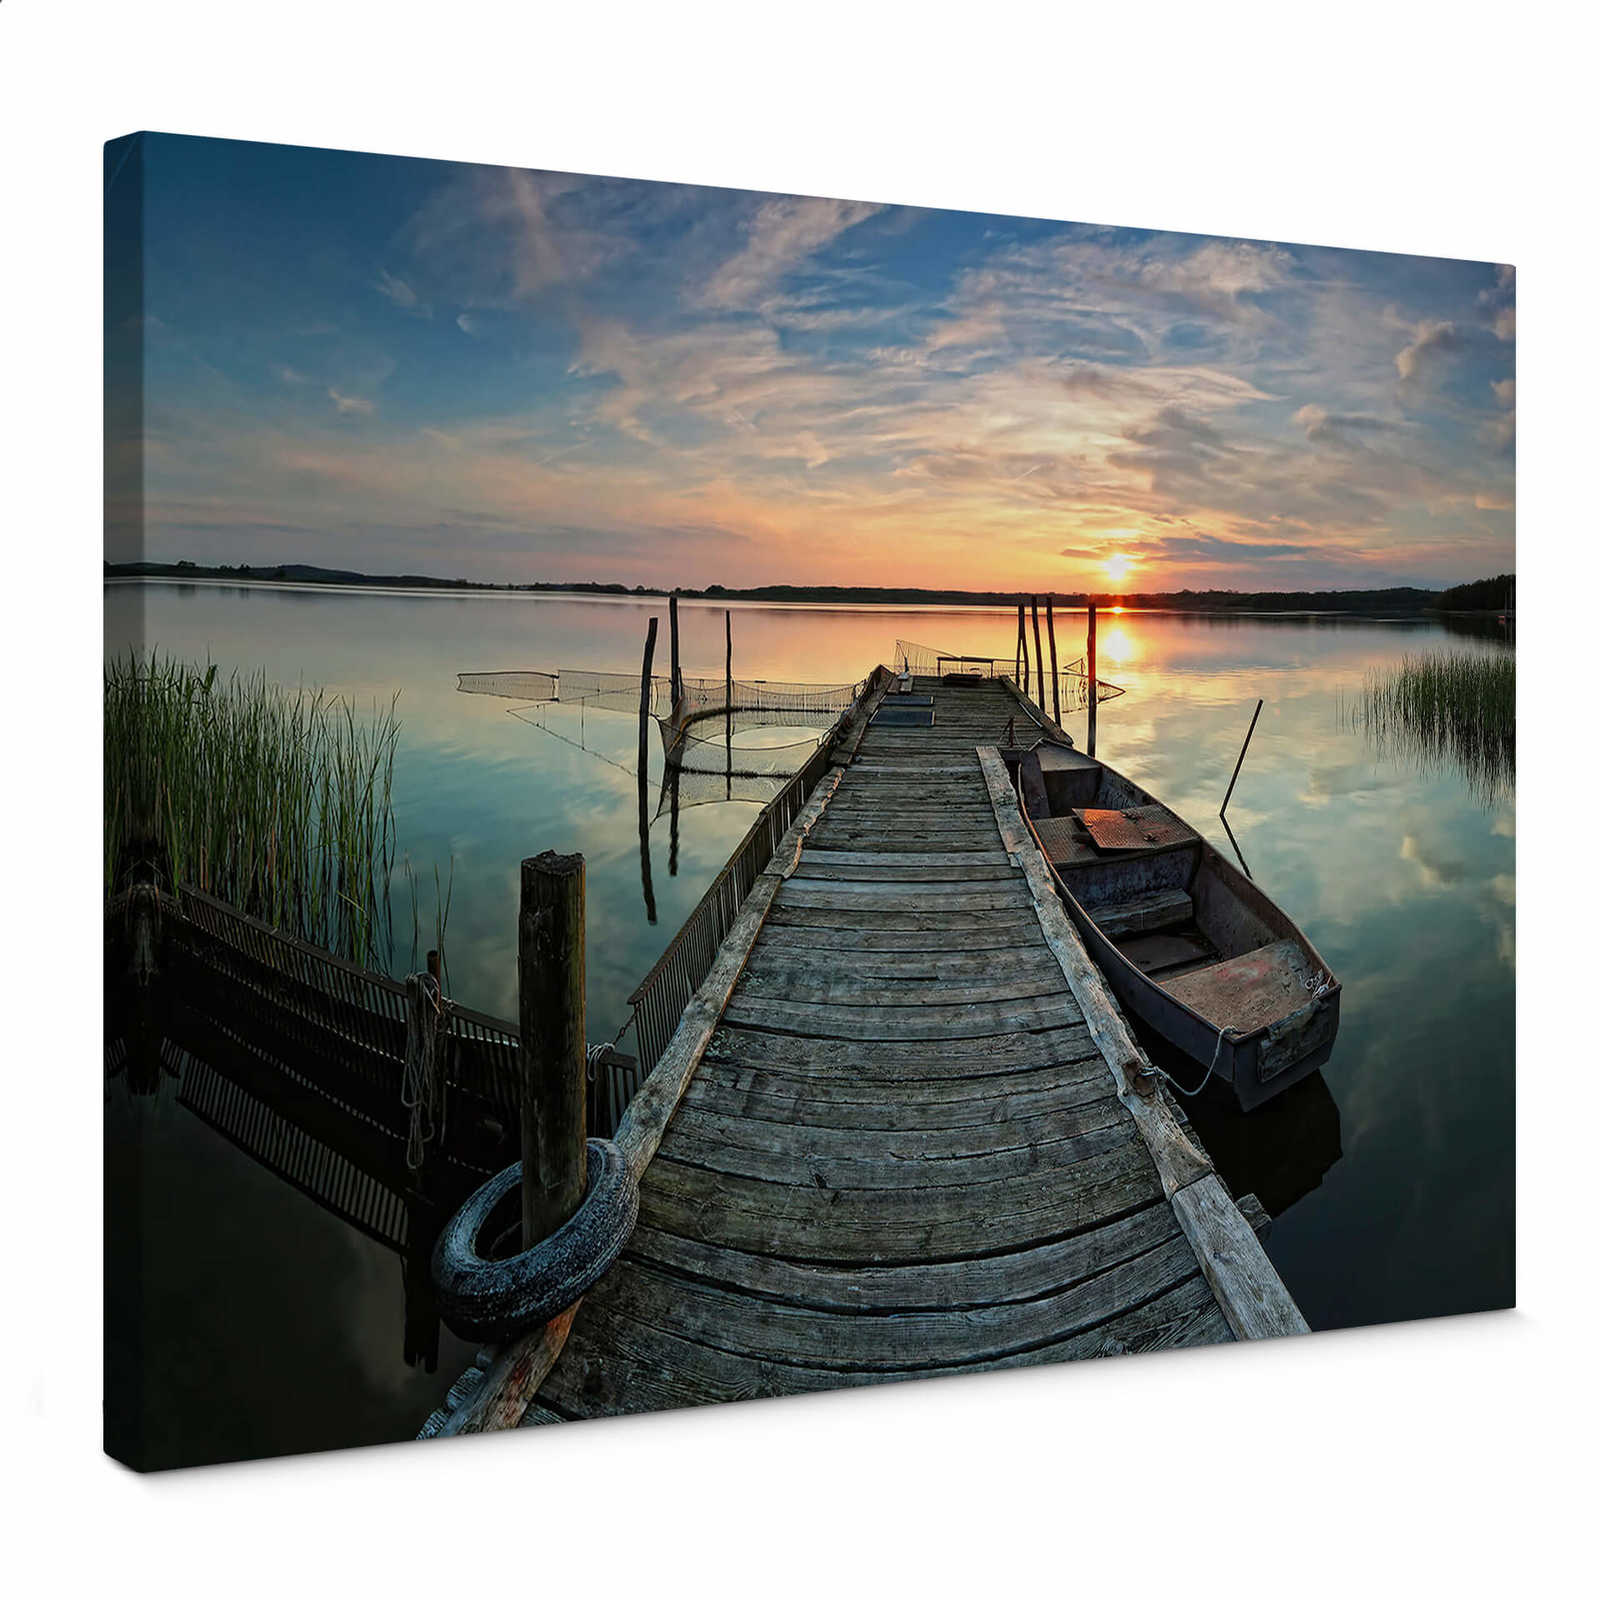         Canvas print sunset at the lake
    